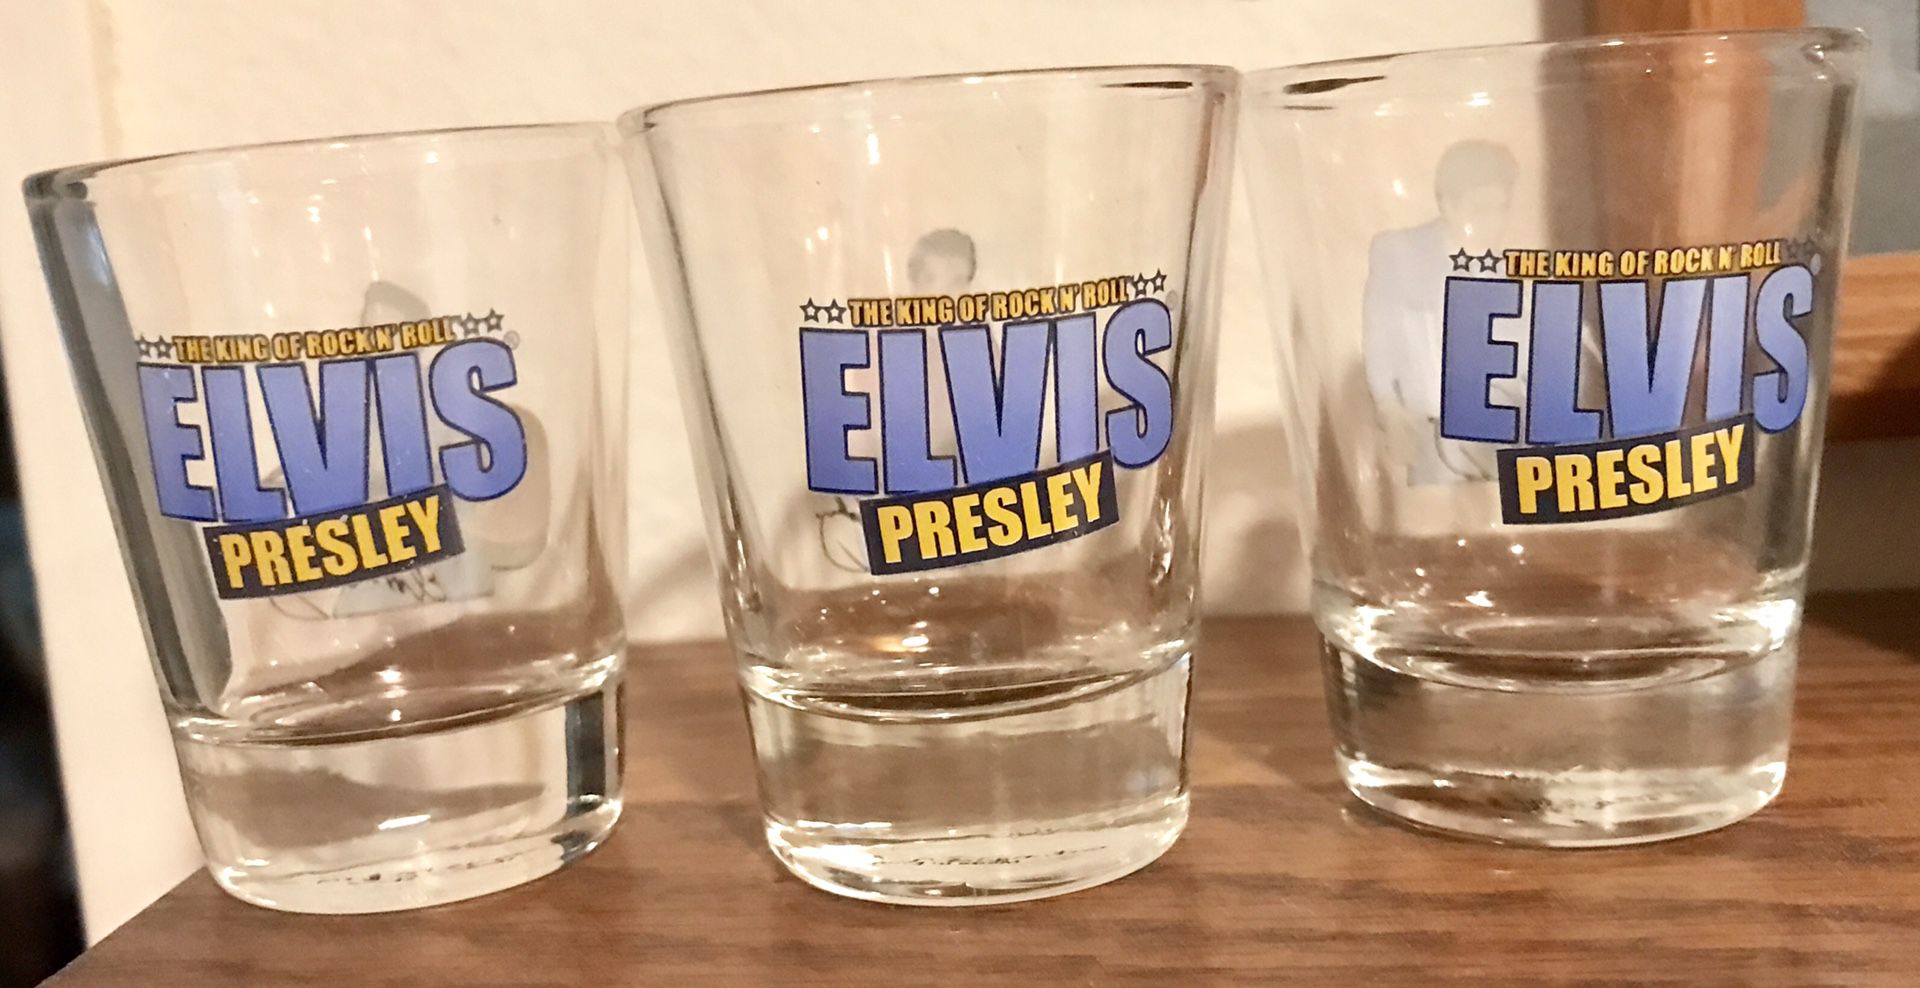 Set of 3 collectible Elvis Presley shot glasses.